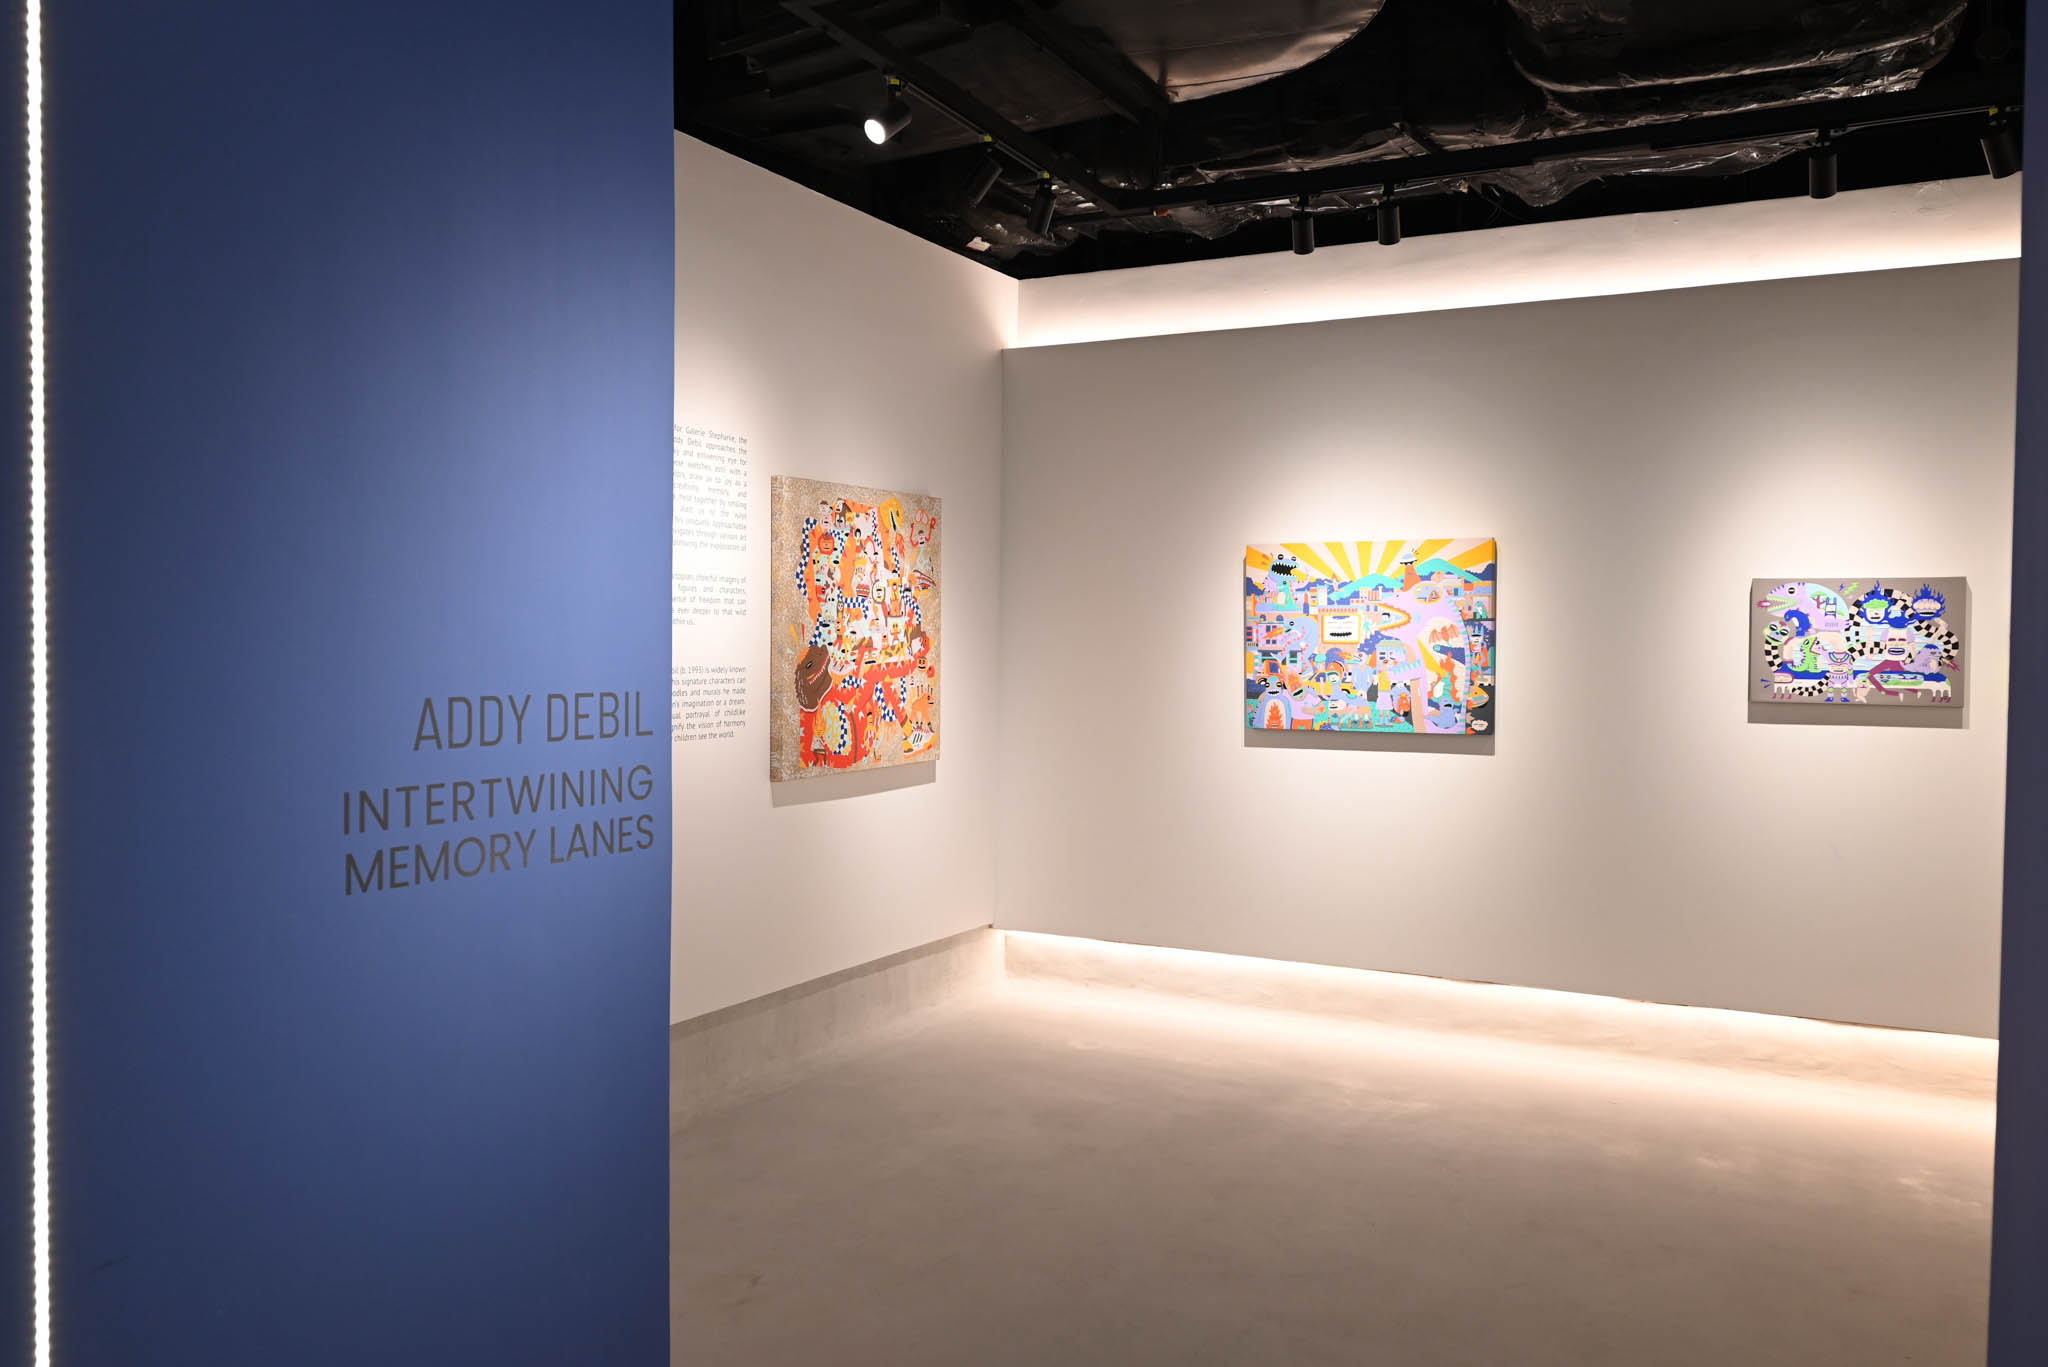 Addy Debil's "Intertwining Memory Lanes" exhibit for Galerie Stephanie x Cartellino.